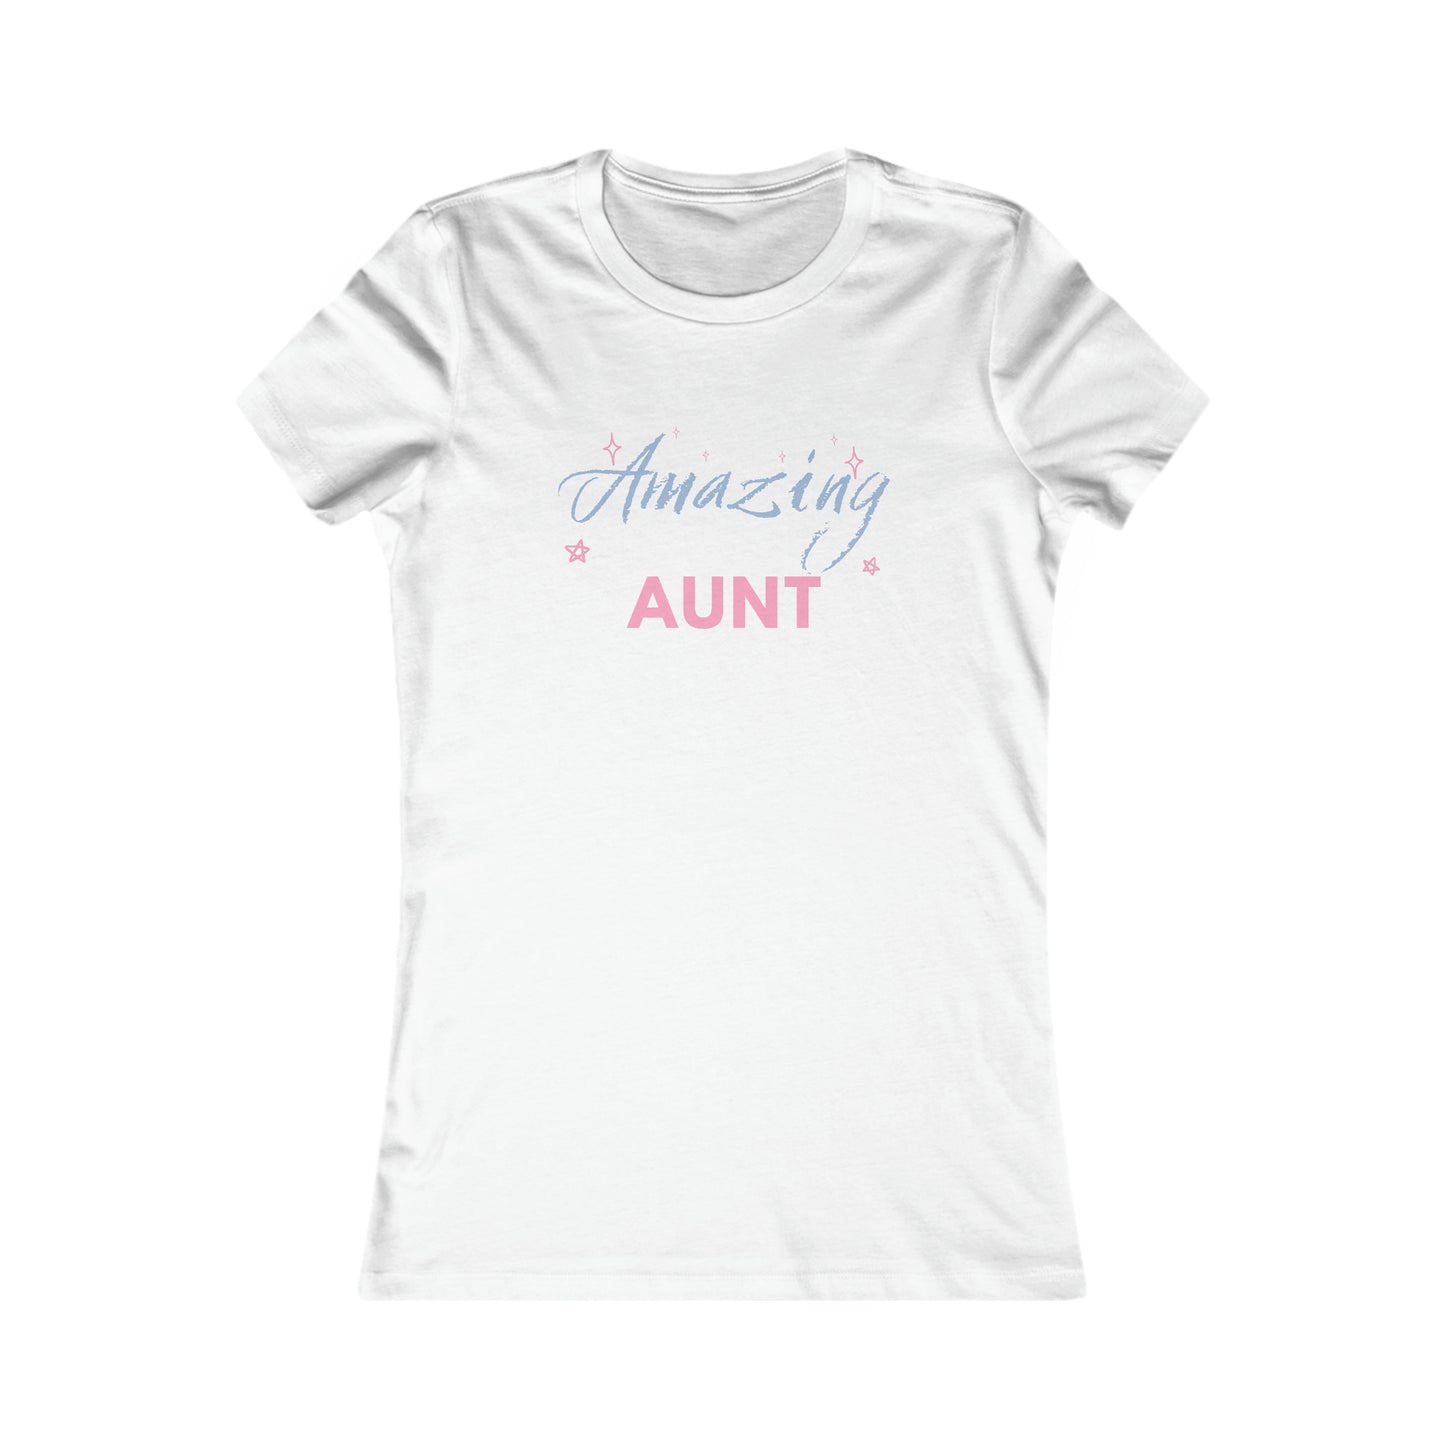 Amazing Aunt Women's Favorite Tee - Trendy Design for Gift